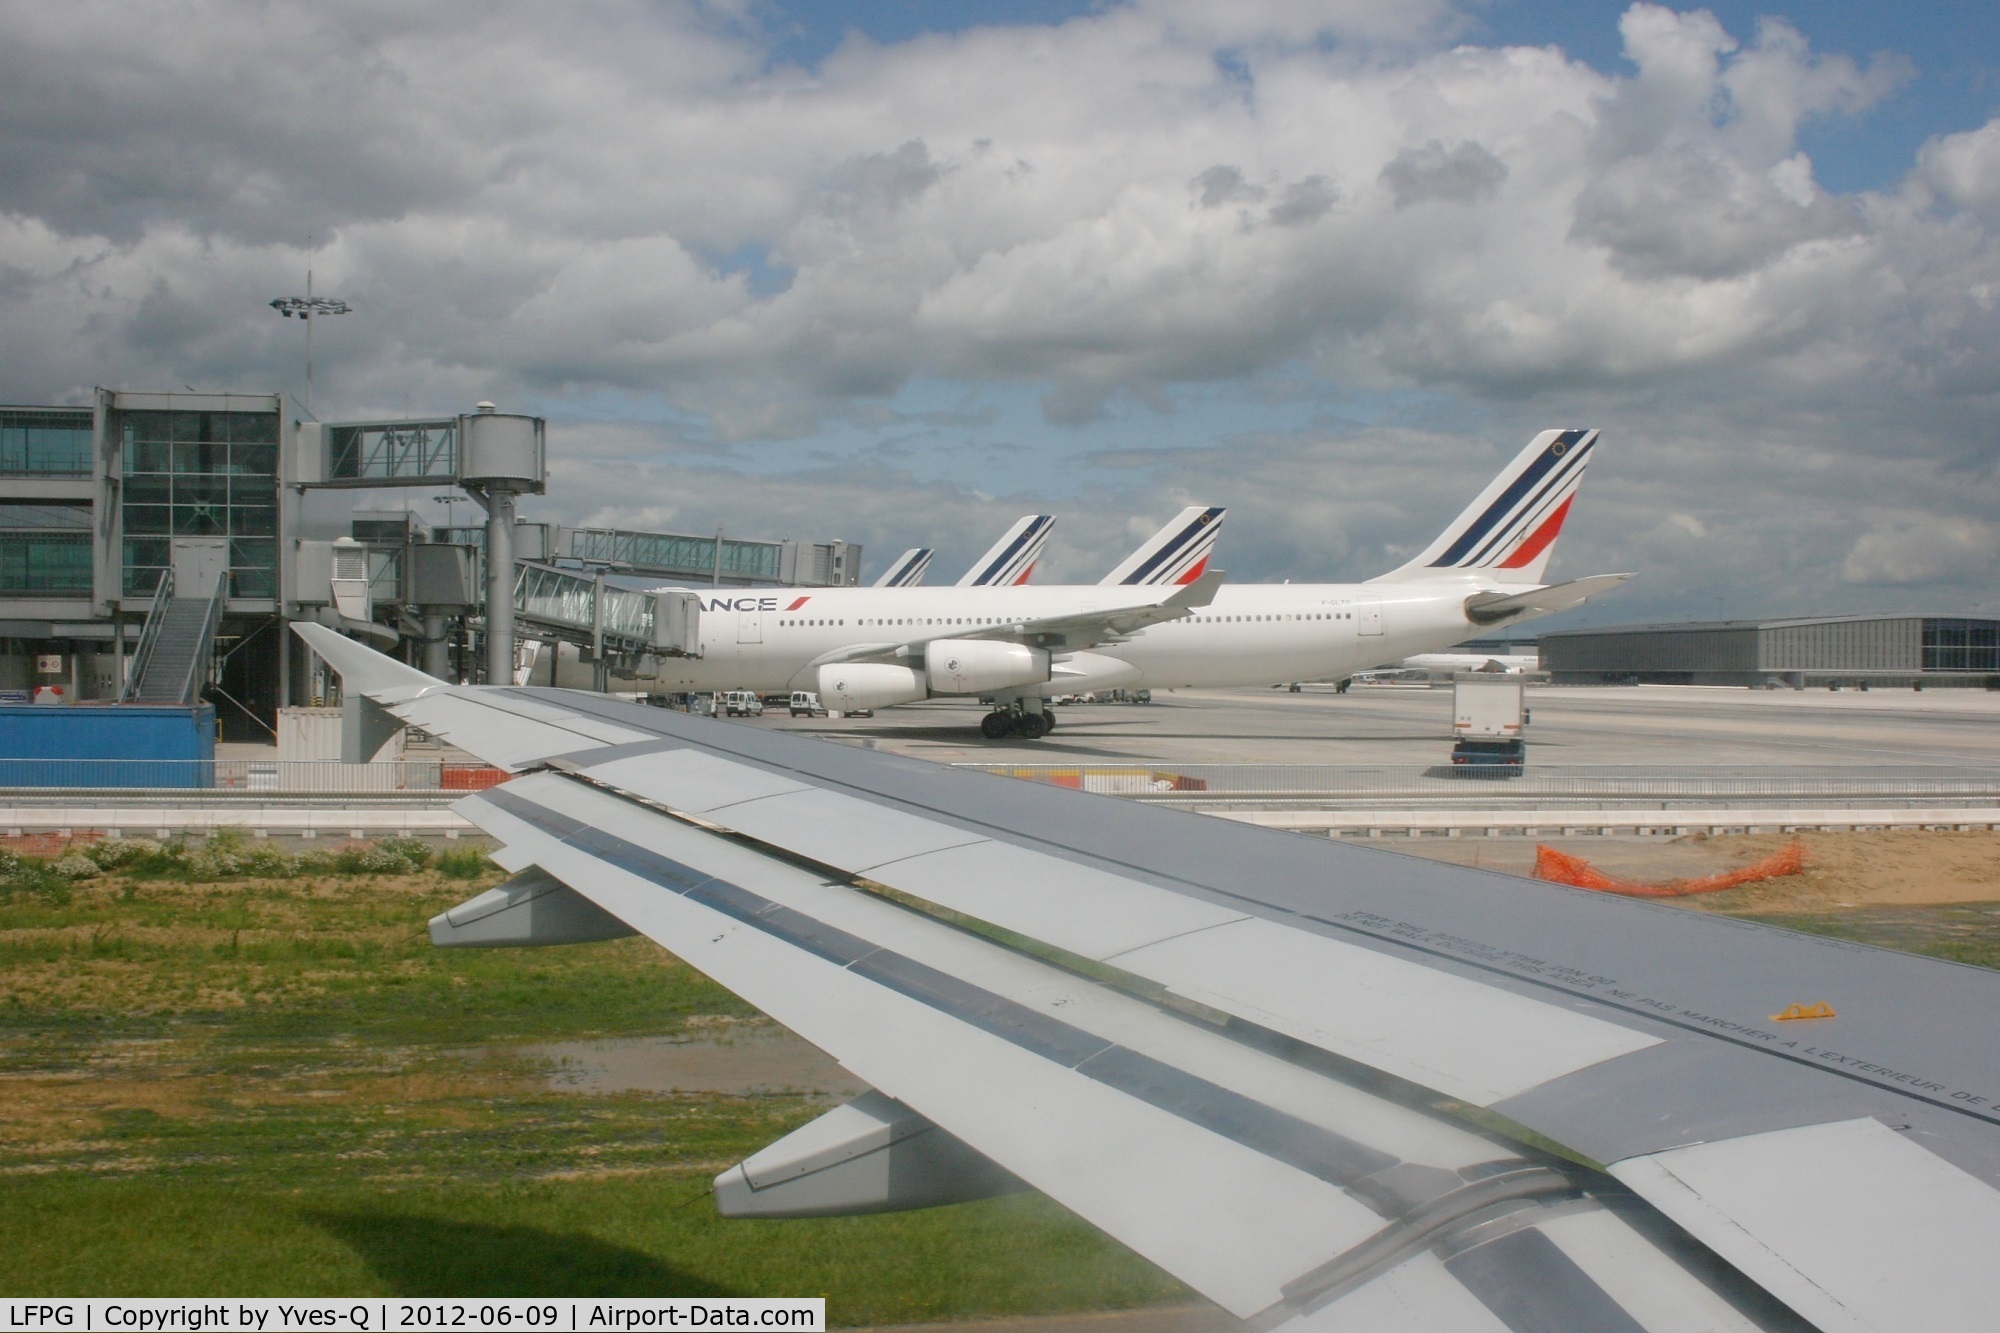 Paris Charles de Gaulle Airport (Roissy Airport), Paris France (LFPG) - Hall L, Roissy Charles De Gaulle Airport (LFPG-CDG)